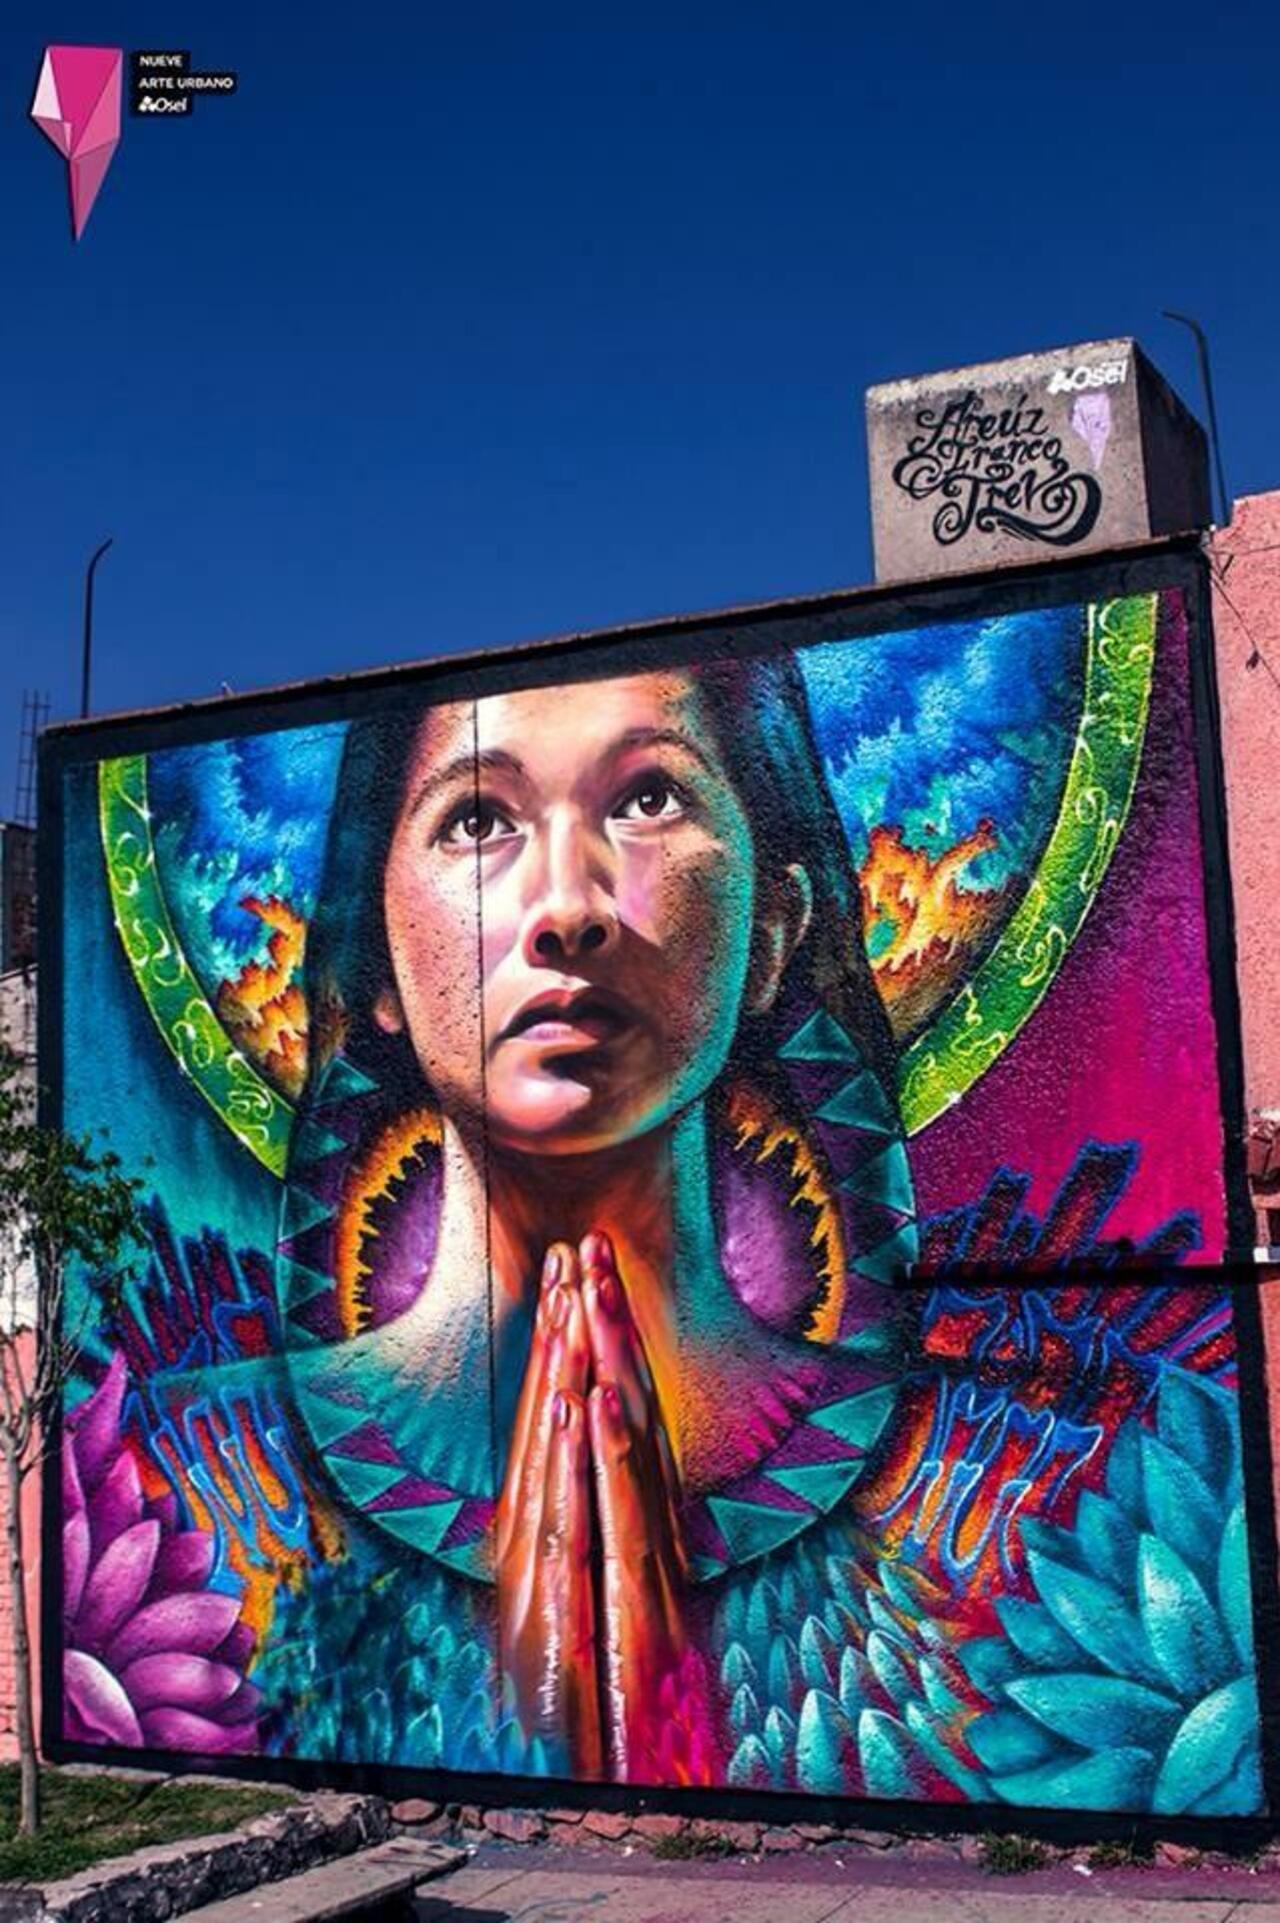 Artist Areúz 77 new Street Art mural in Queretaro, Mexico #Art #graffiti #mural #streetart http://t.co/PnTgxtqSIK